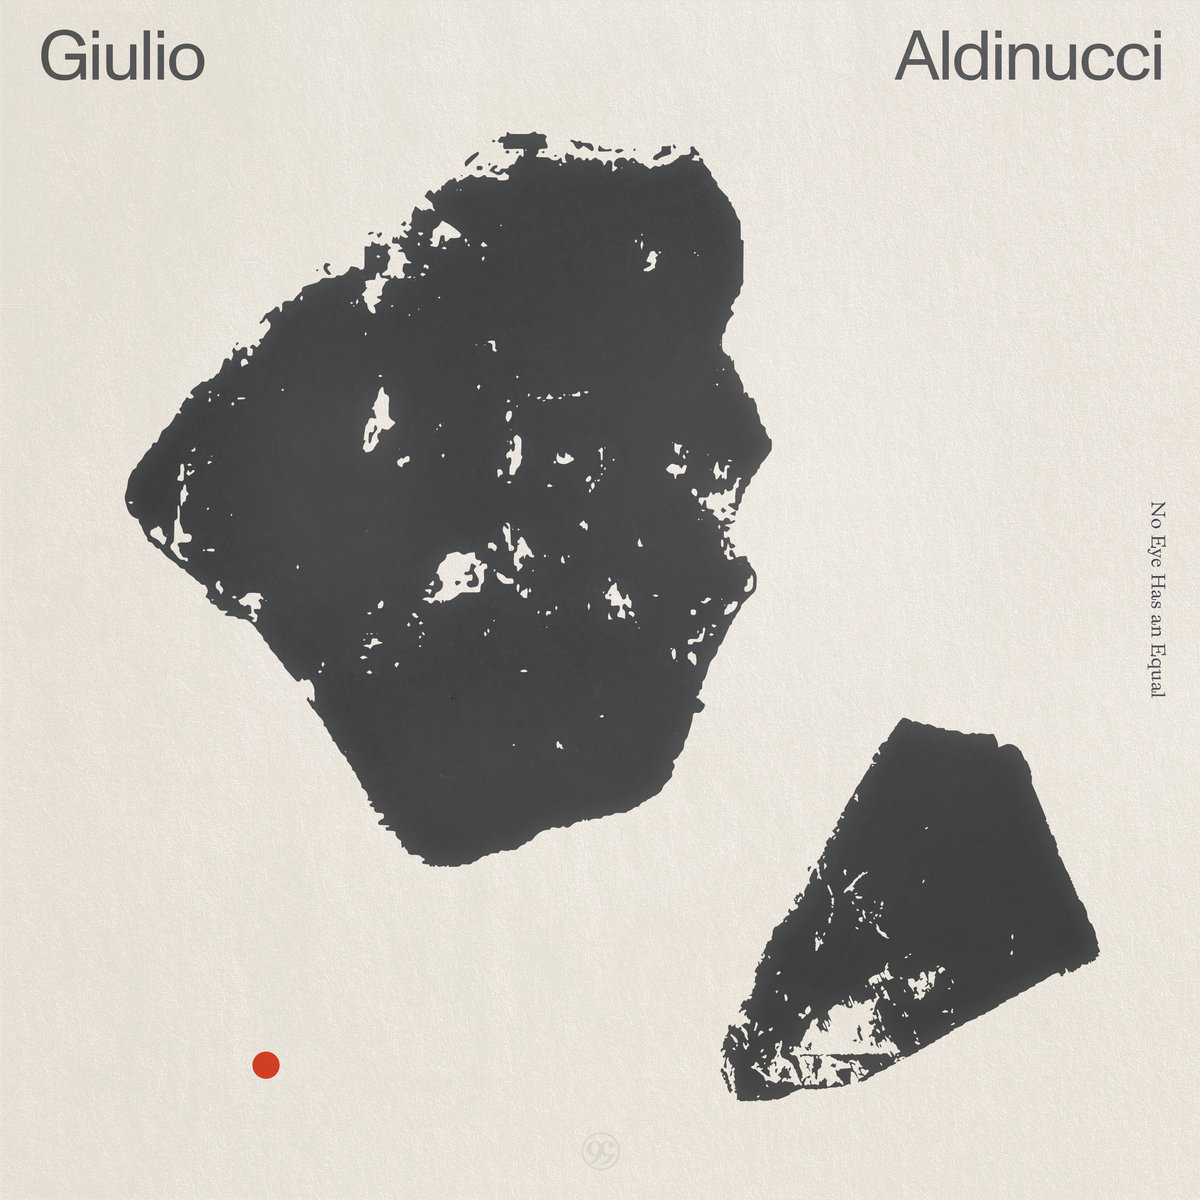 Giulio Aldinucci No Eye Has an Equal cover